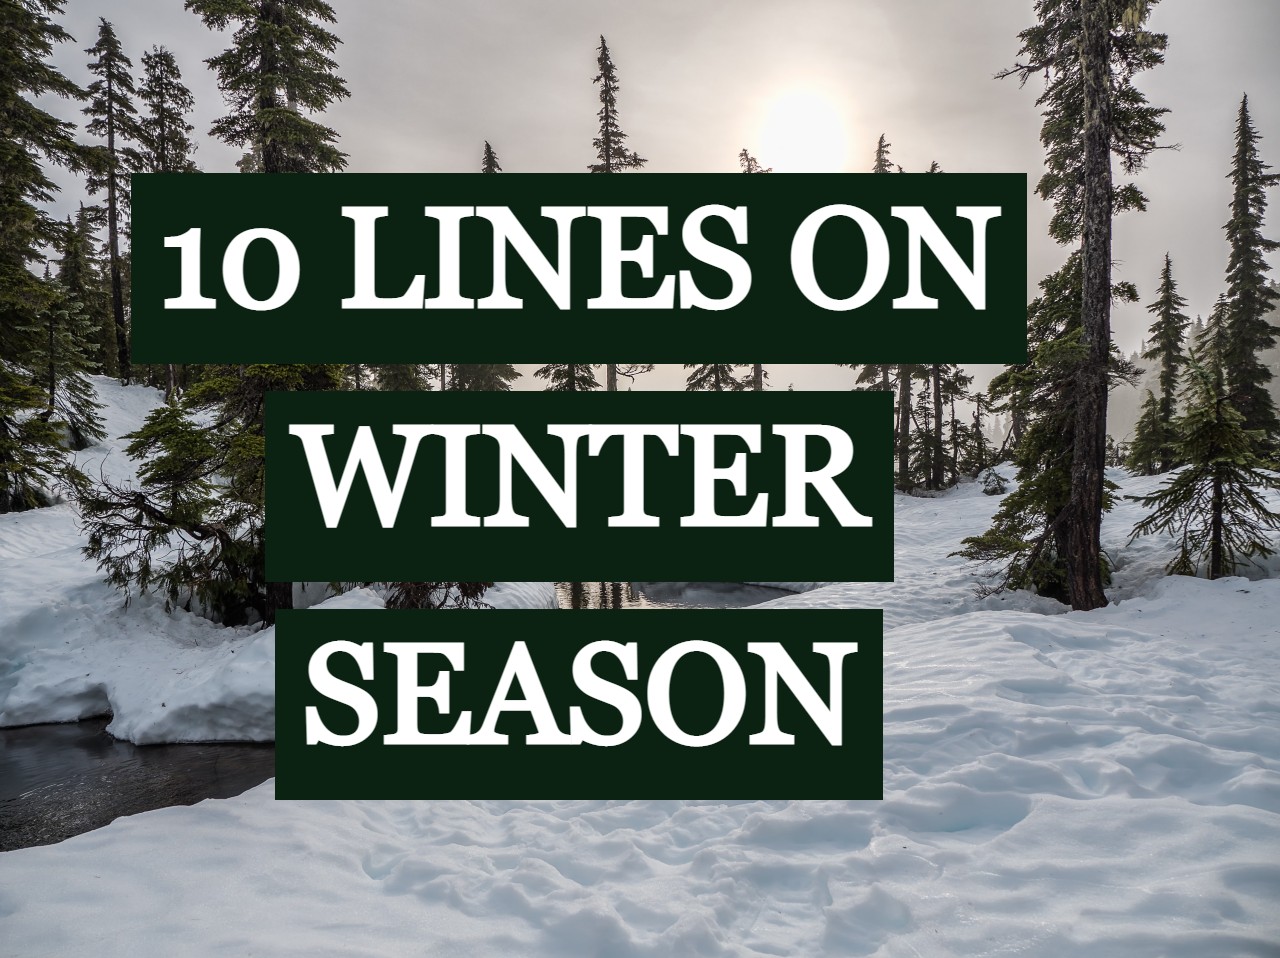 10 LINES ON WINTER SEASON - LEARN WITH FUN